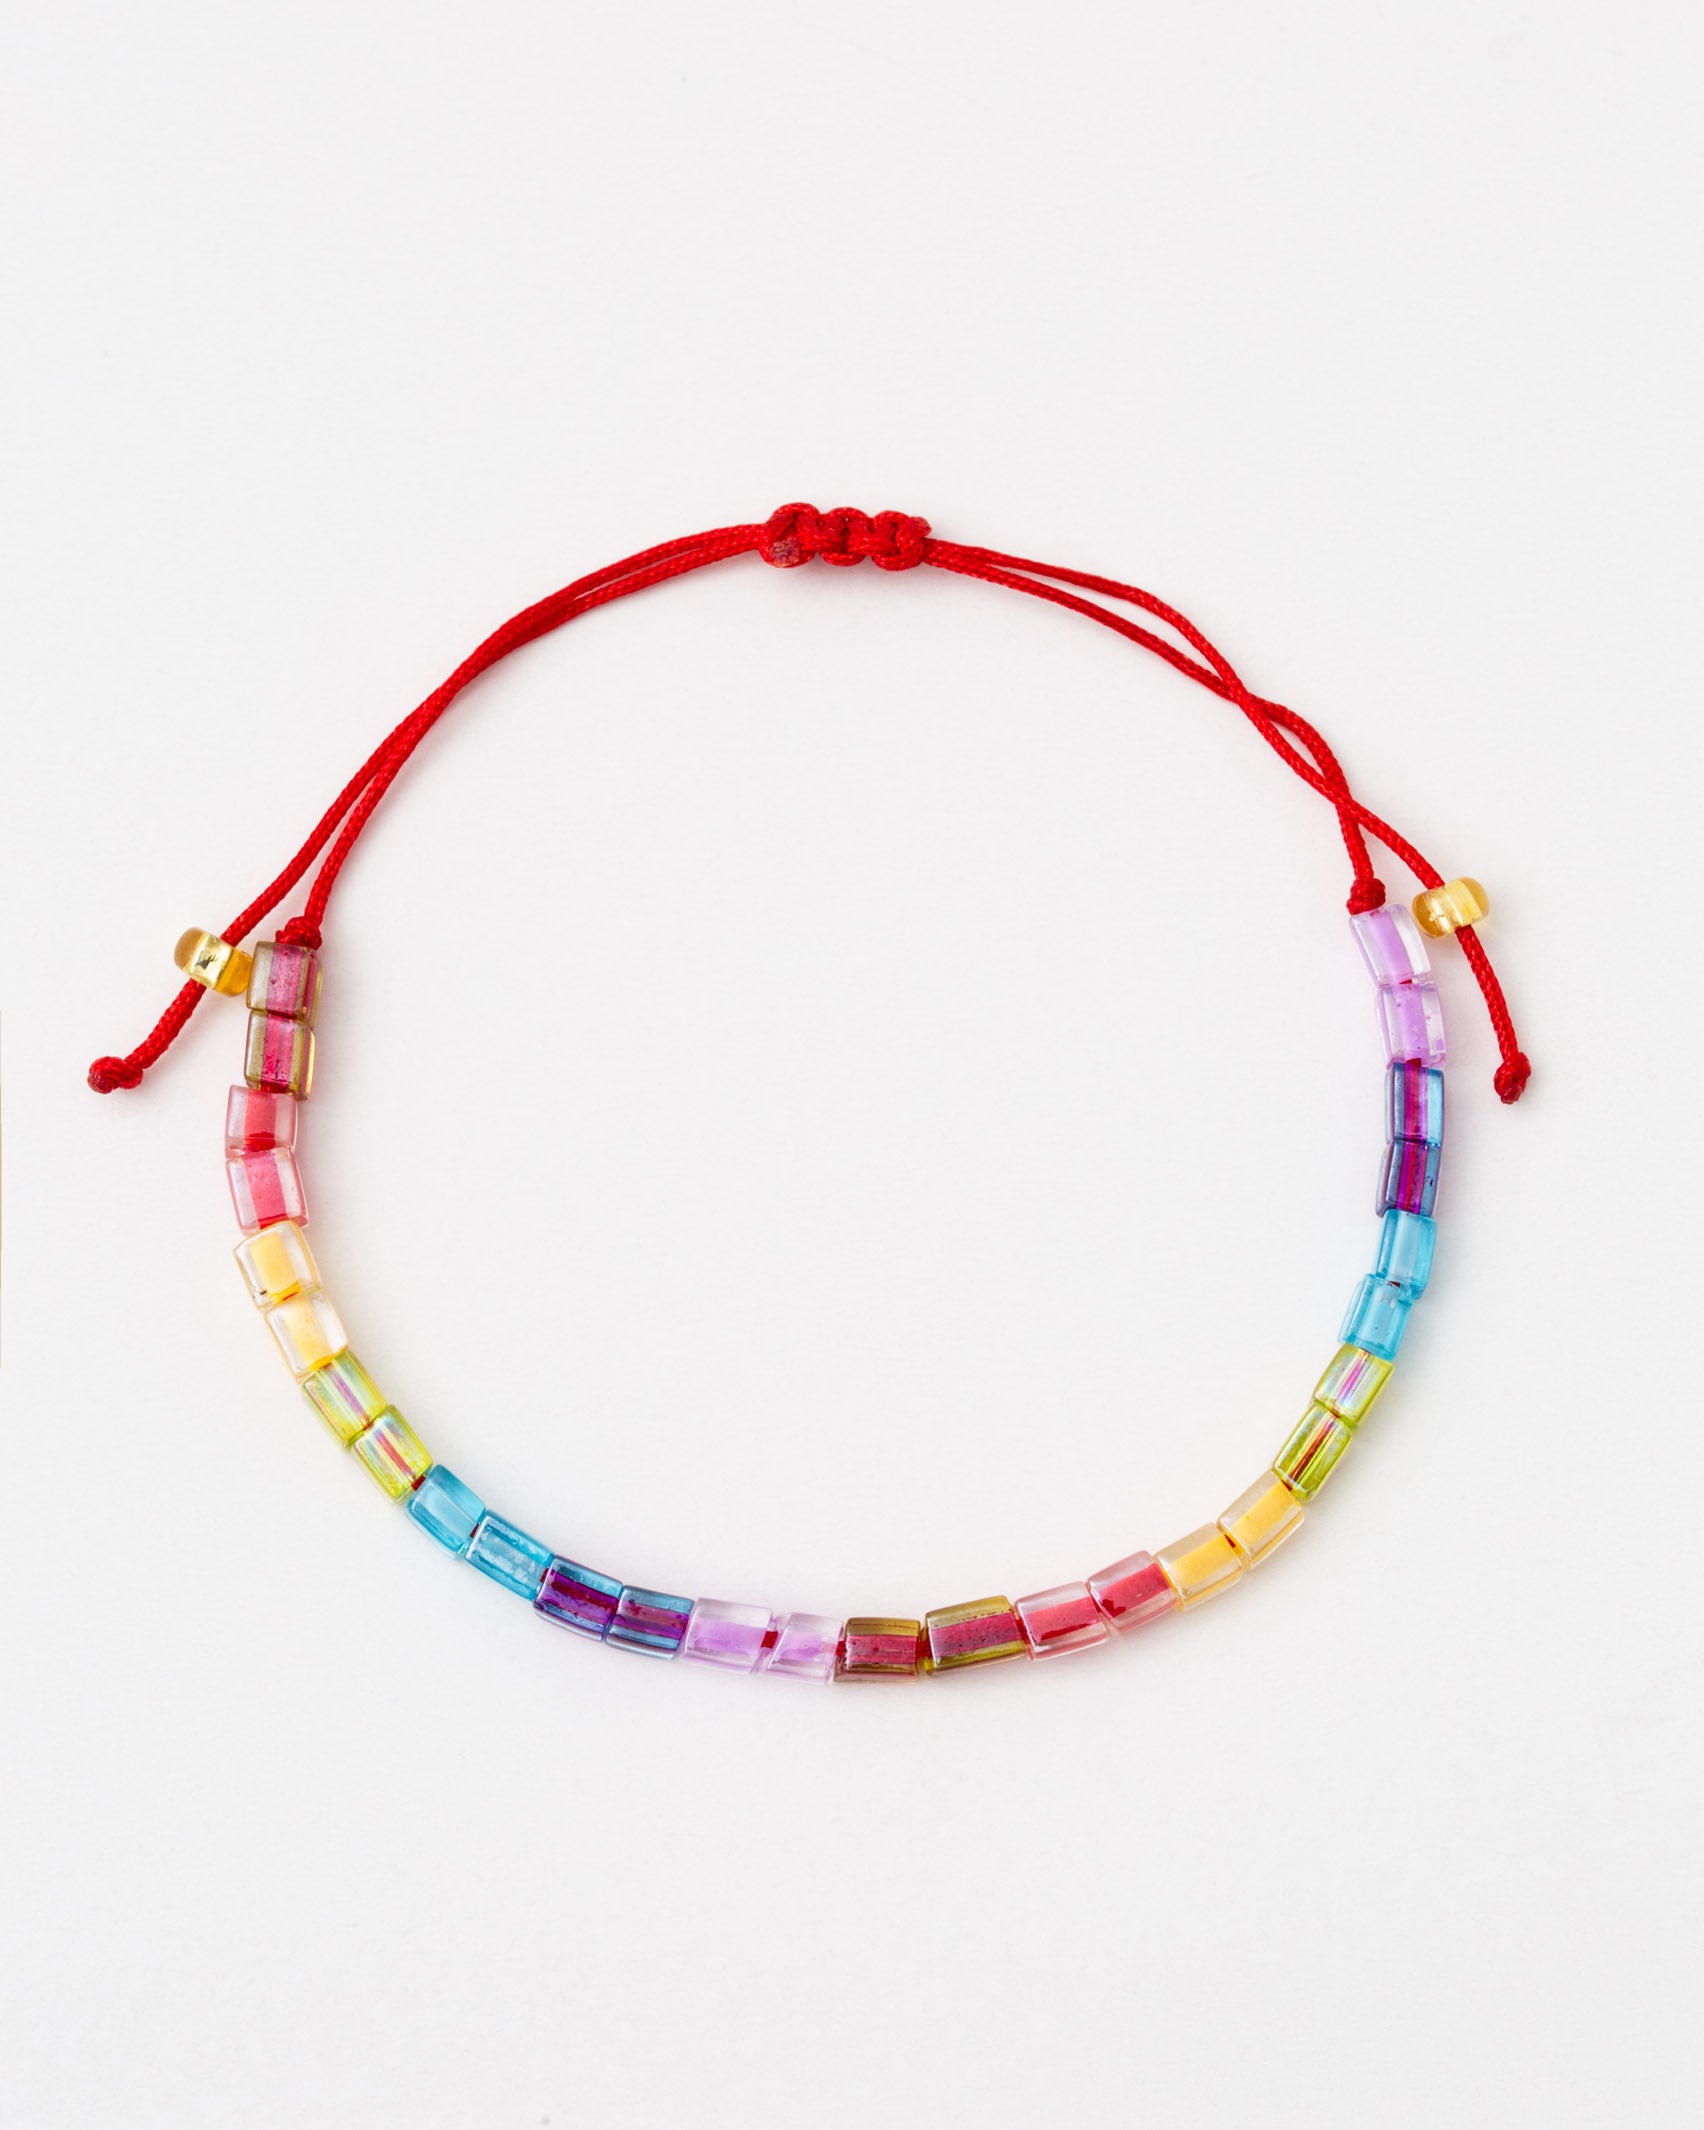 Schmales Regenbogenperlen Armband - Broke + Schön#farbe_red